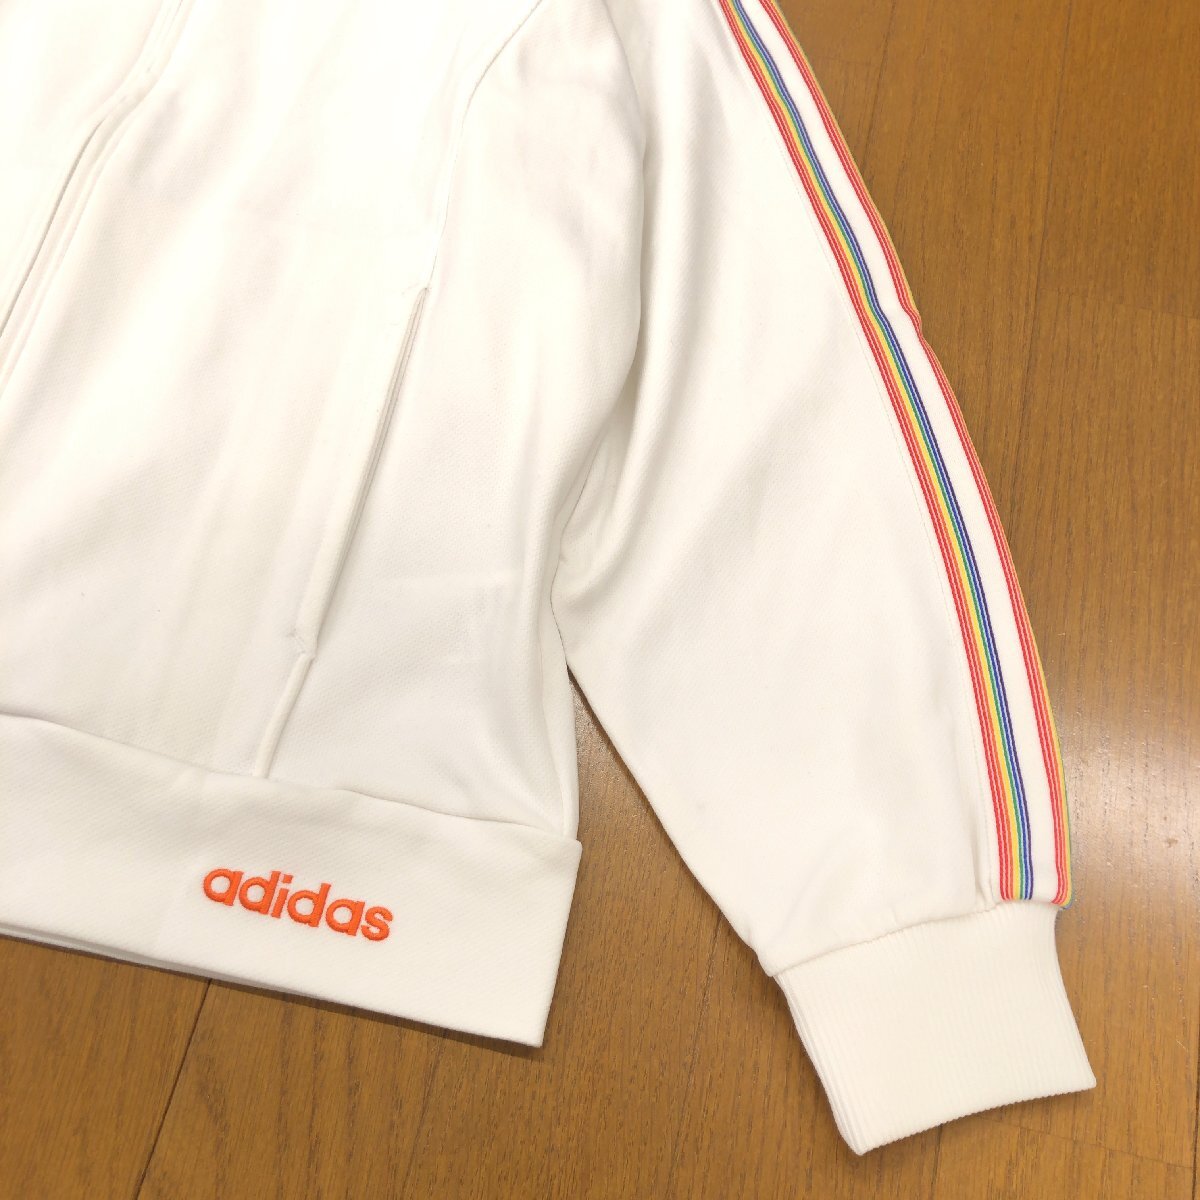 adidas Adidas Rainbow line jersey jacket L white white jersey lady's for women training sport 